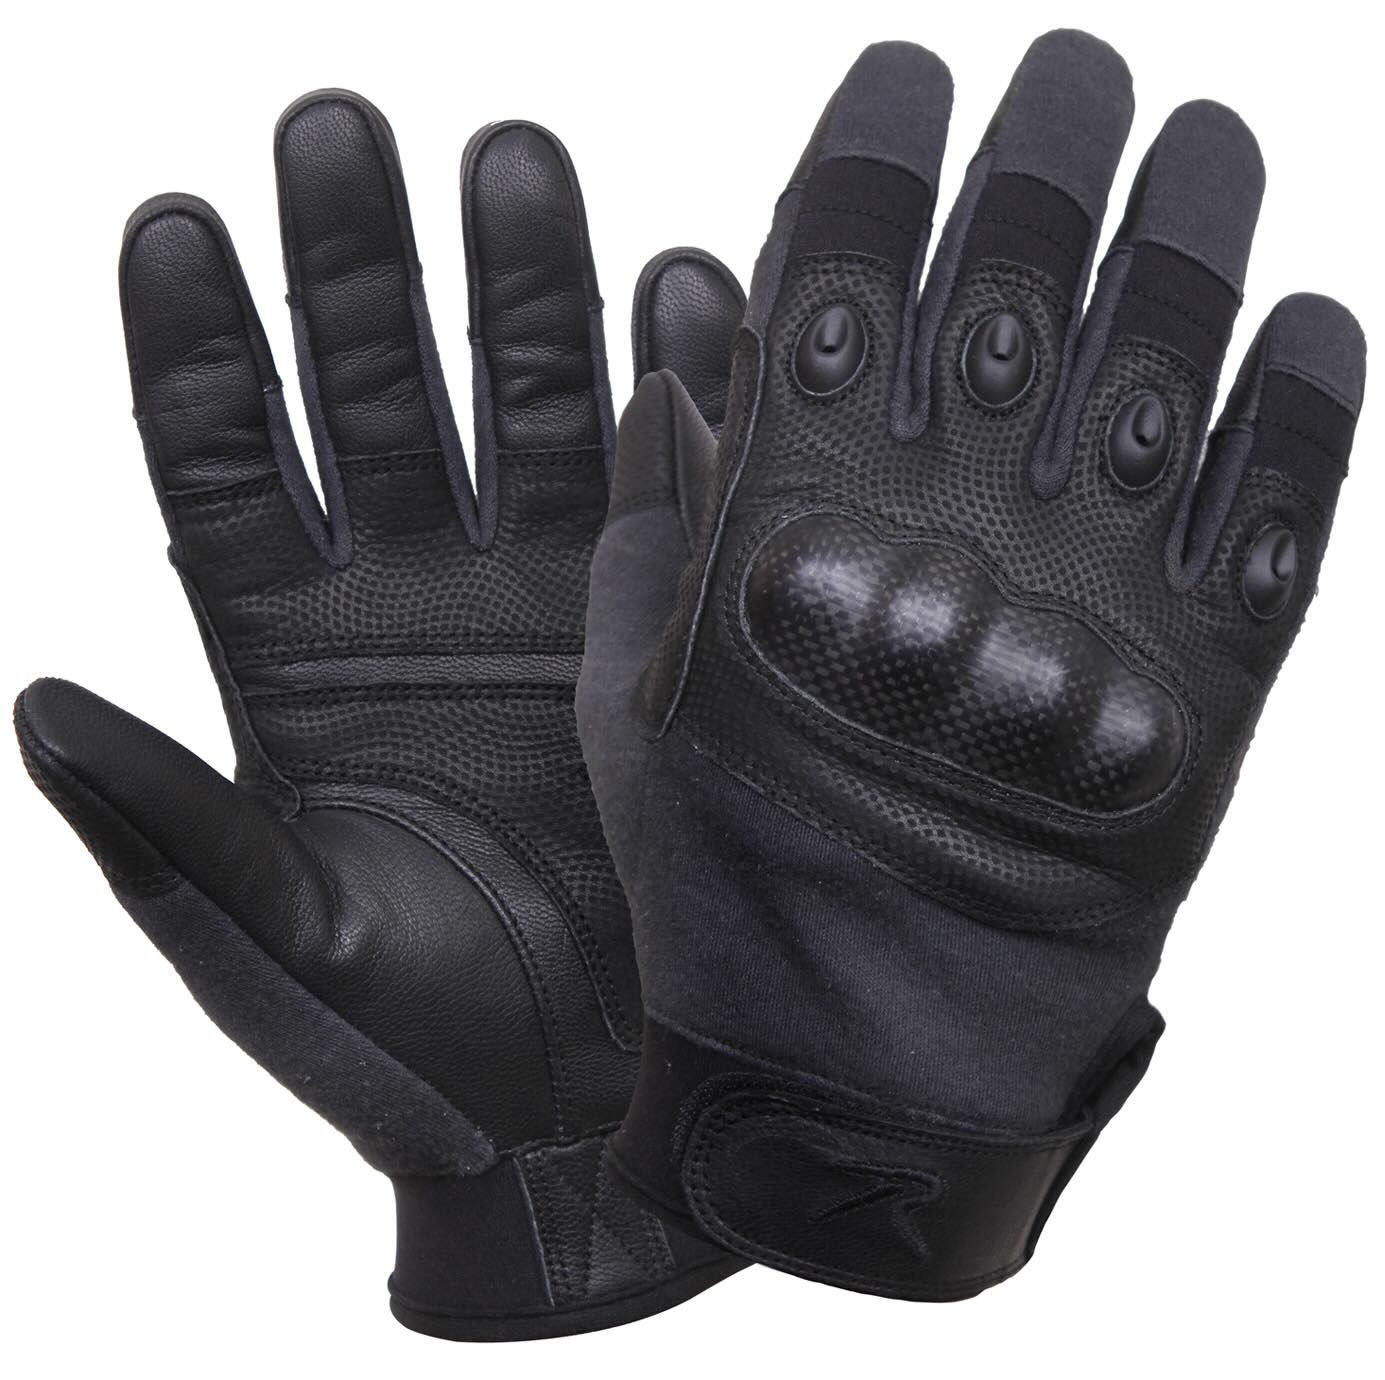 Hard Knuckle Gloves - Rothco Carbon Fiber Hard Knuckle Cut/Fire Resistant Gloves